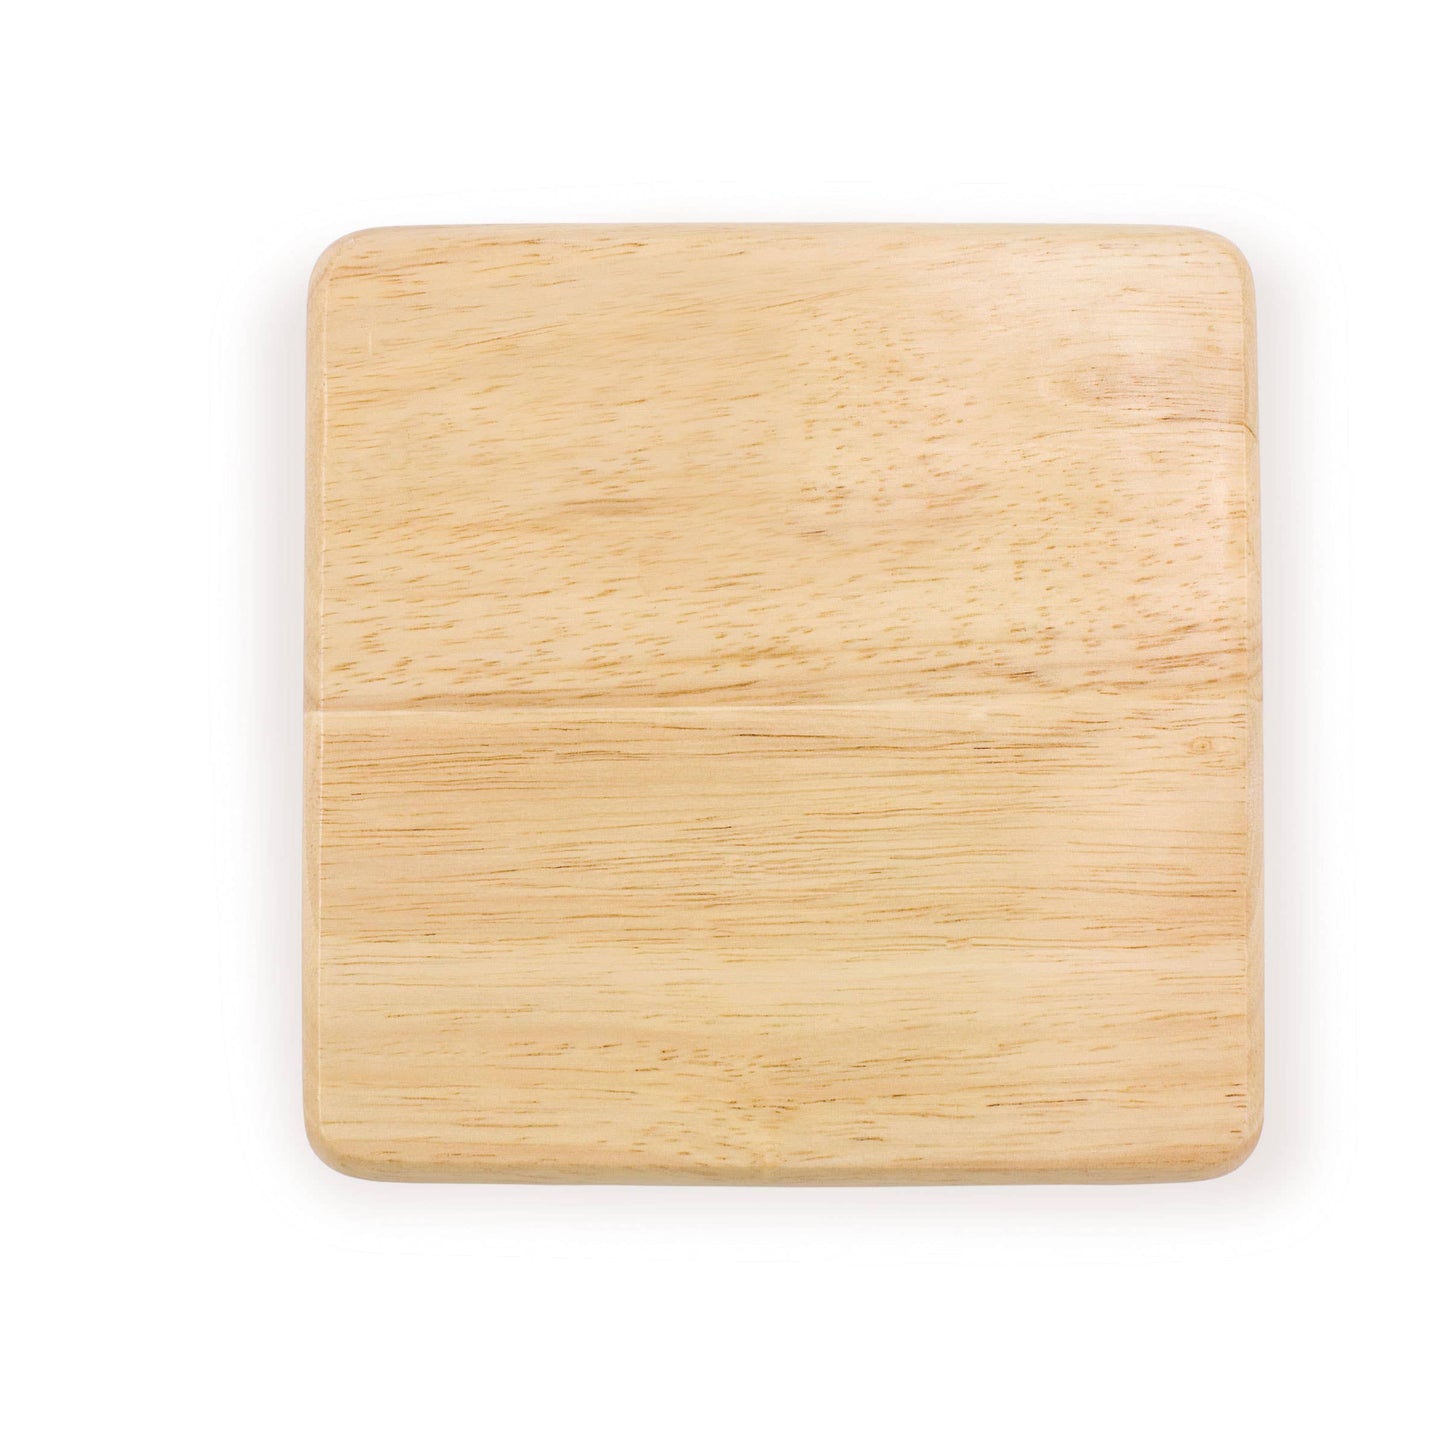 6" Square Cutting Board - Core